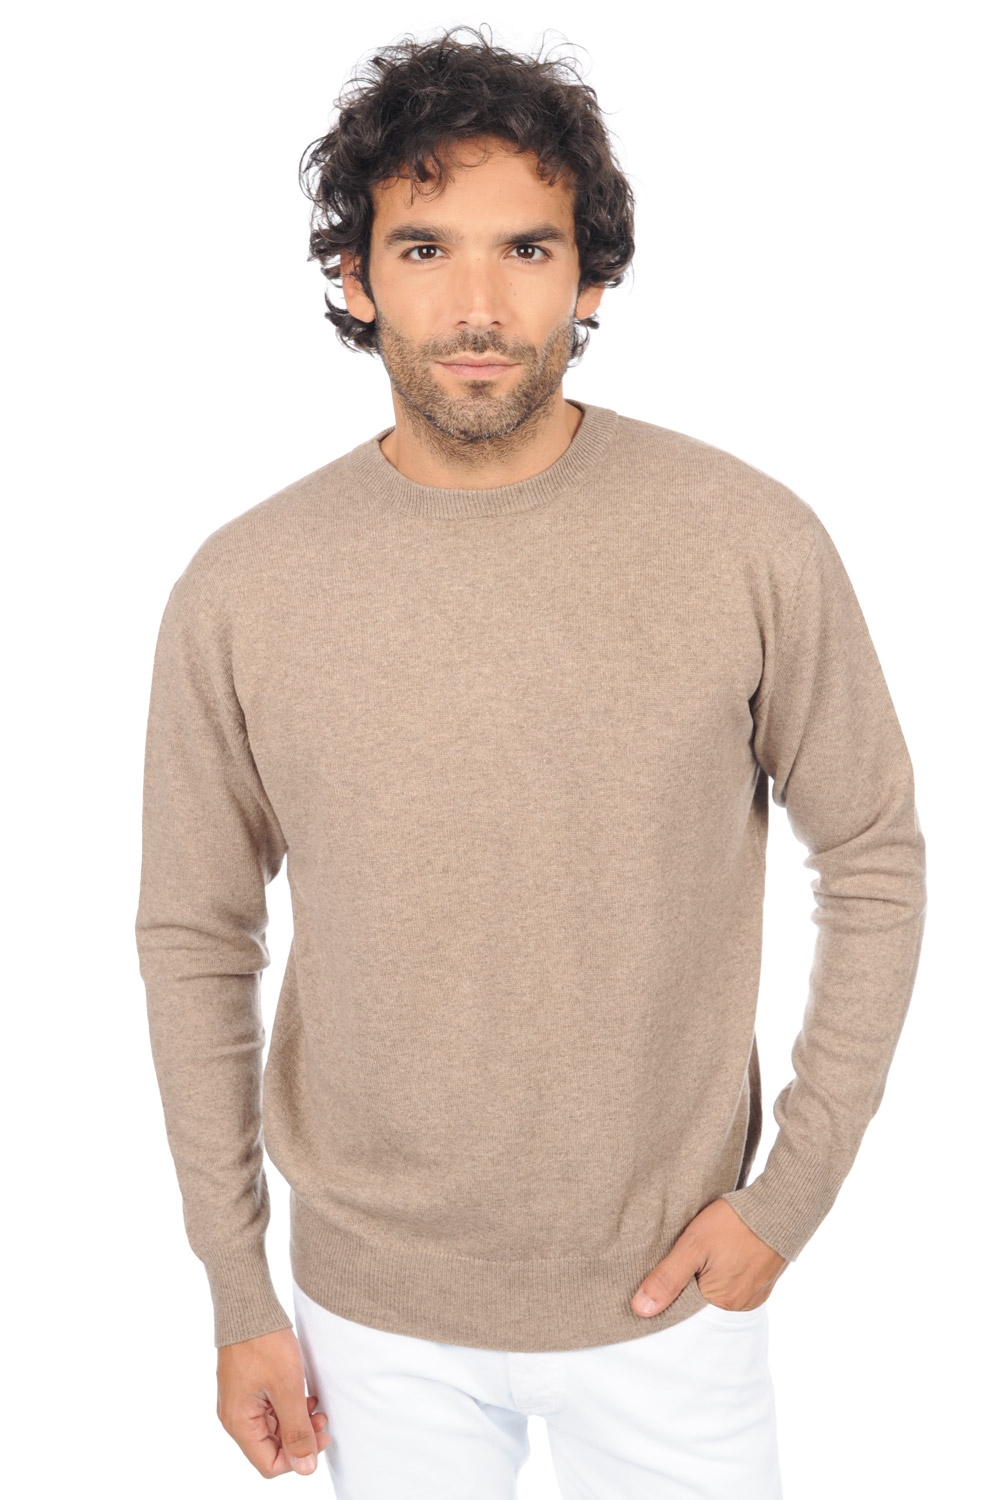 Cashmere men premium sweaters nestor premium dolma natural xs